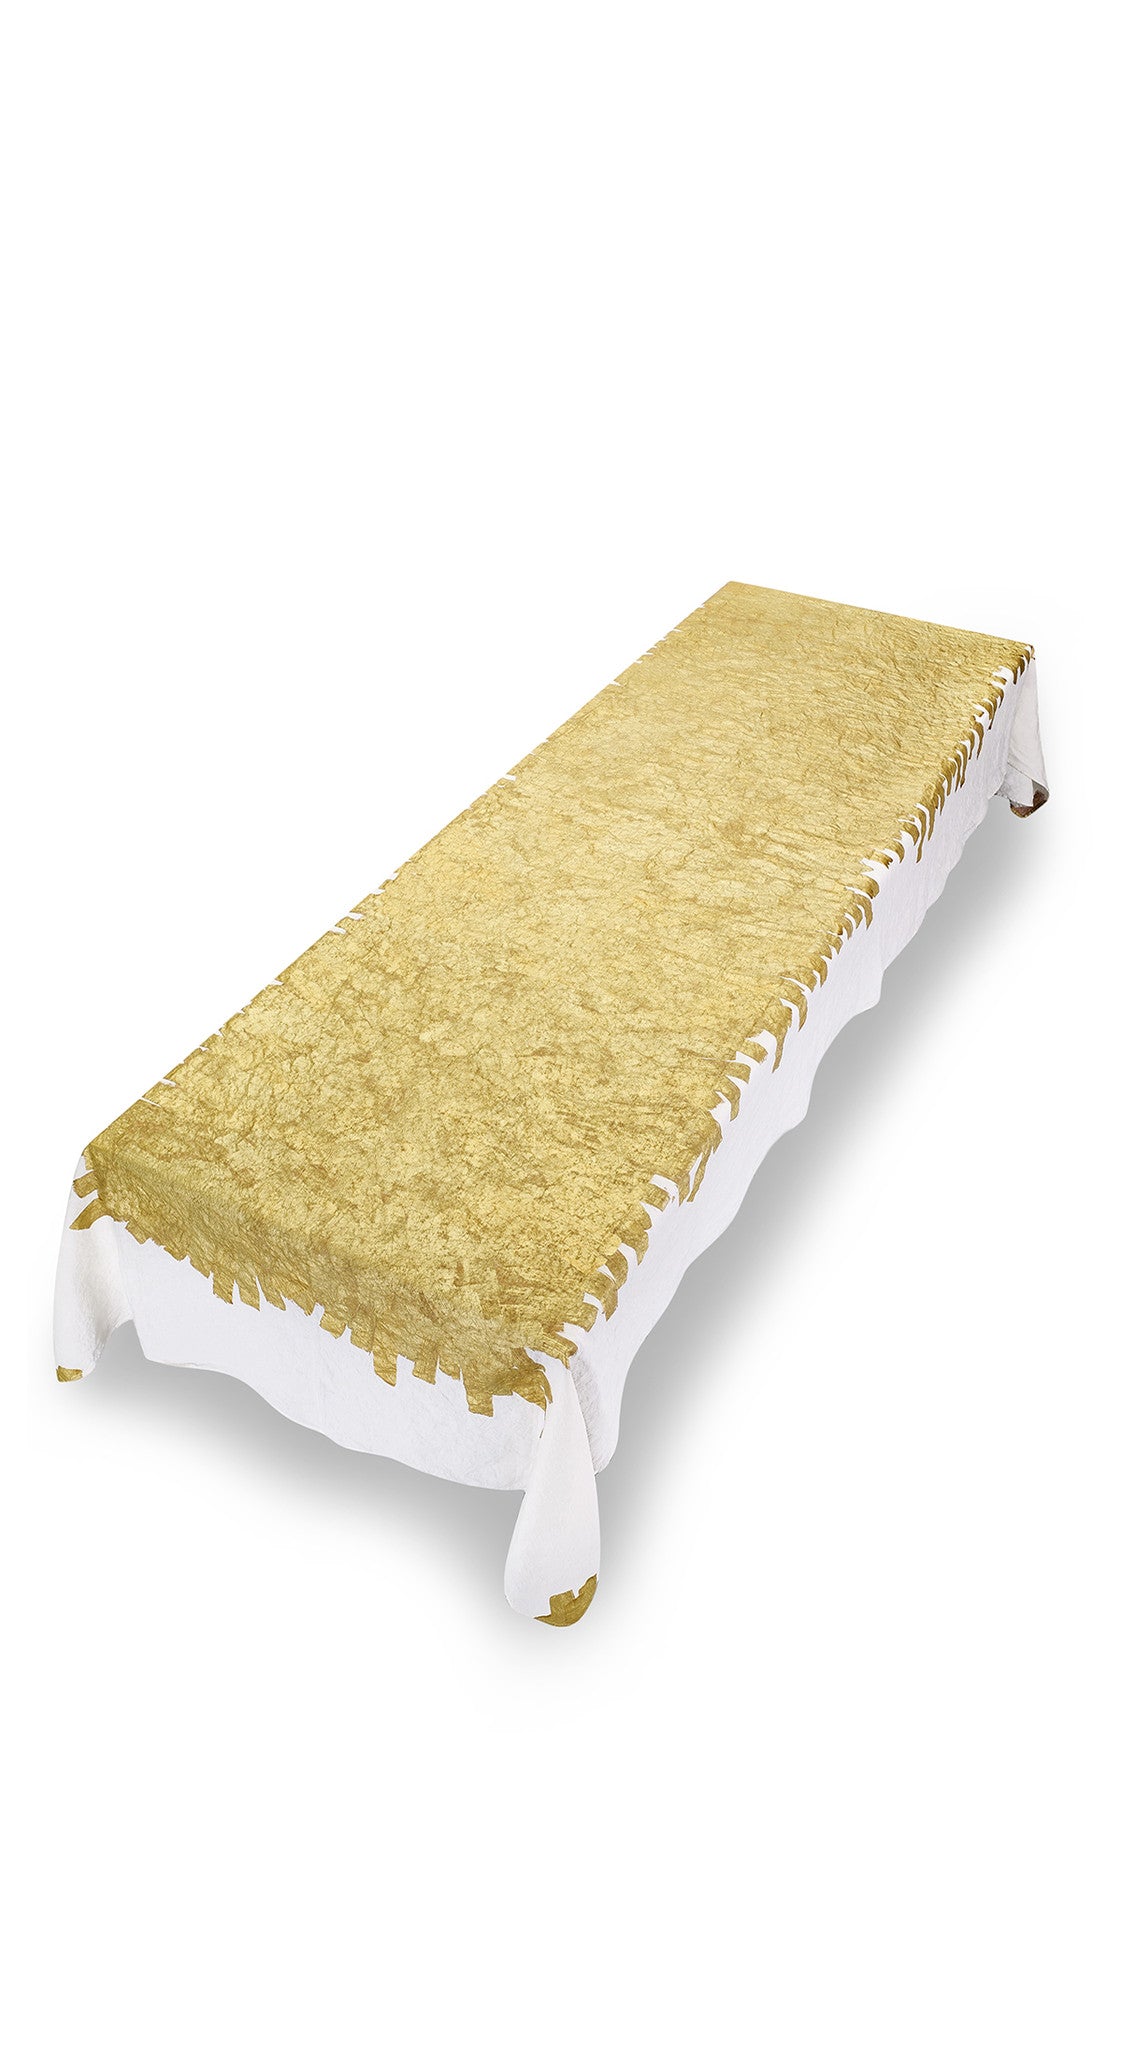 "Gold" Summerill & Bishop x Carolina Bucci Linen Tablecloth